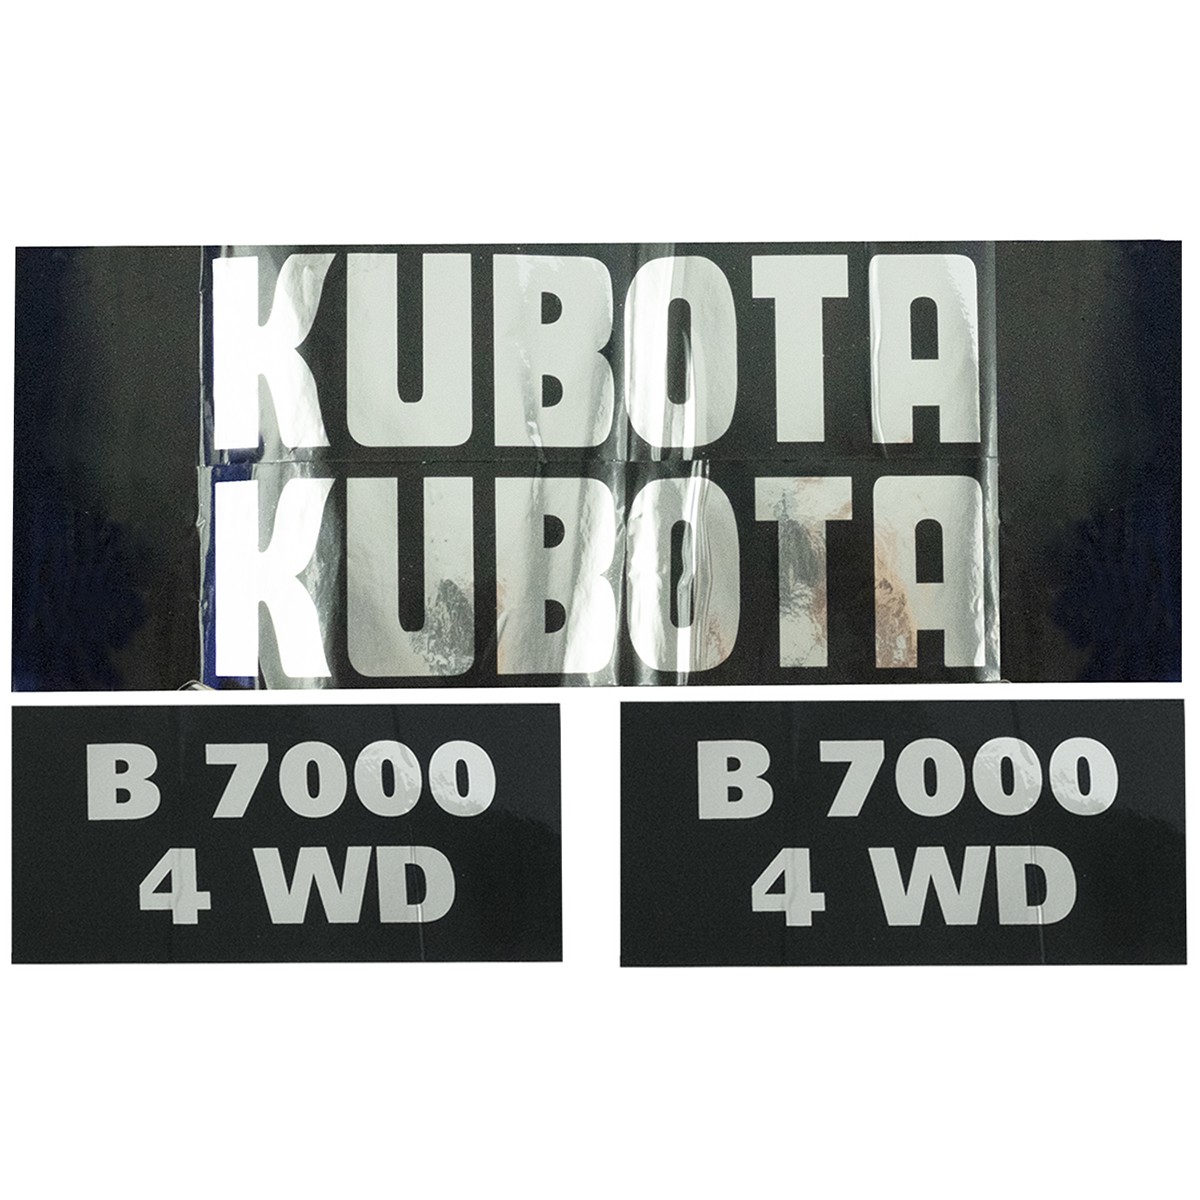 Samolepky Kubota B7000 4WD